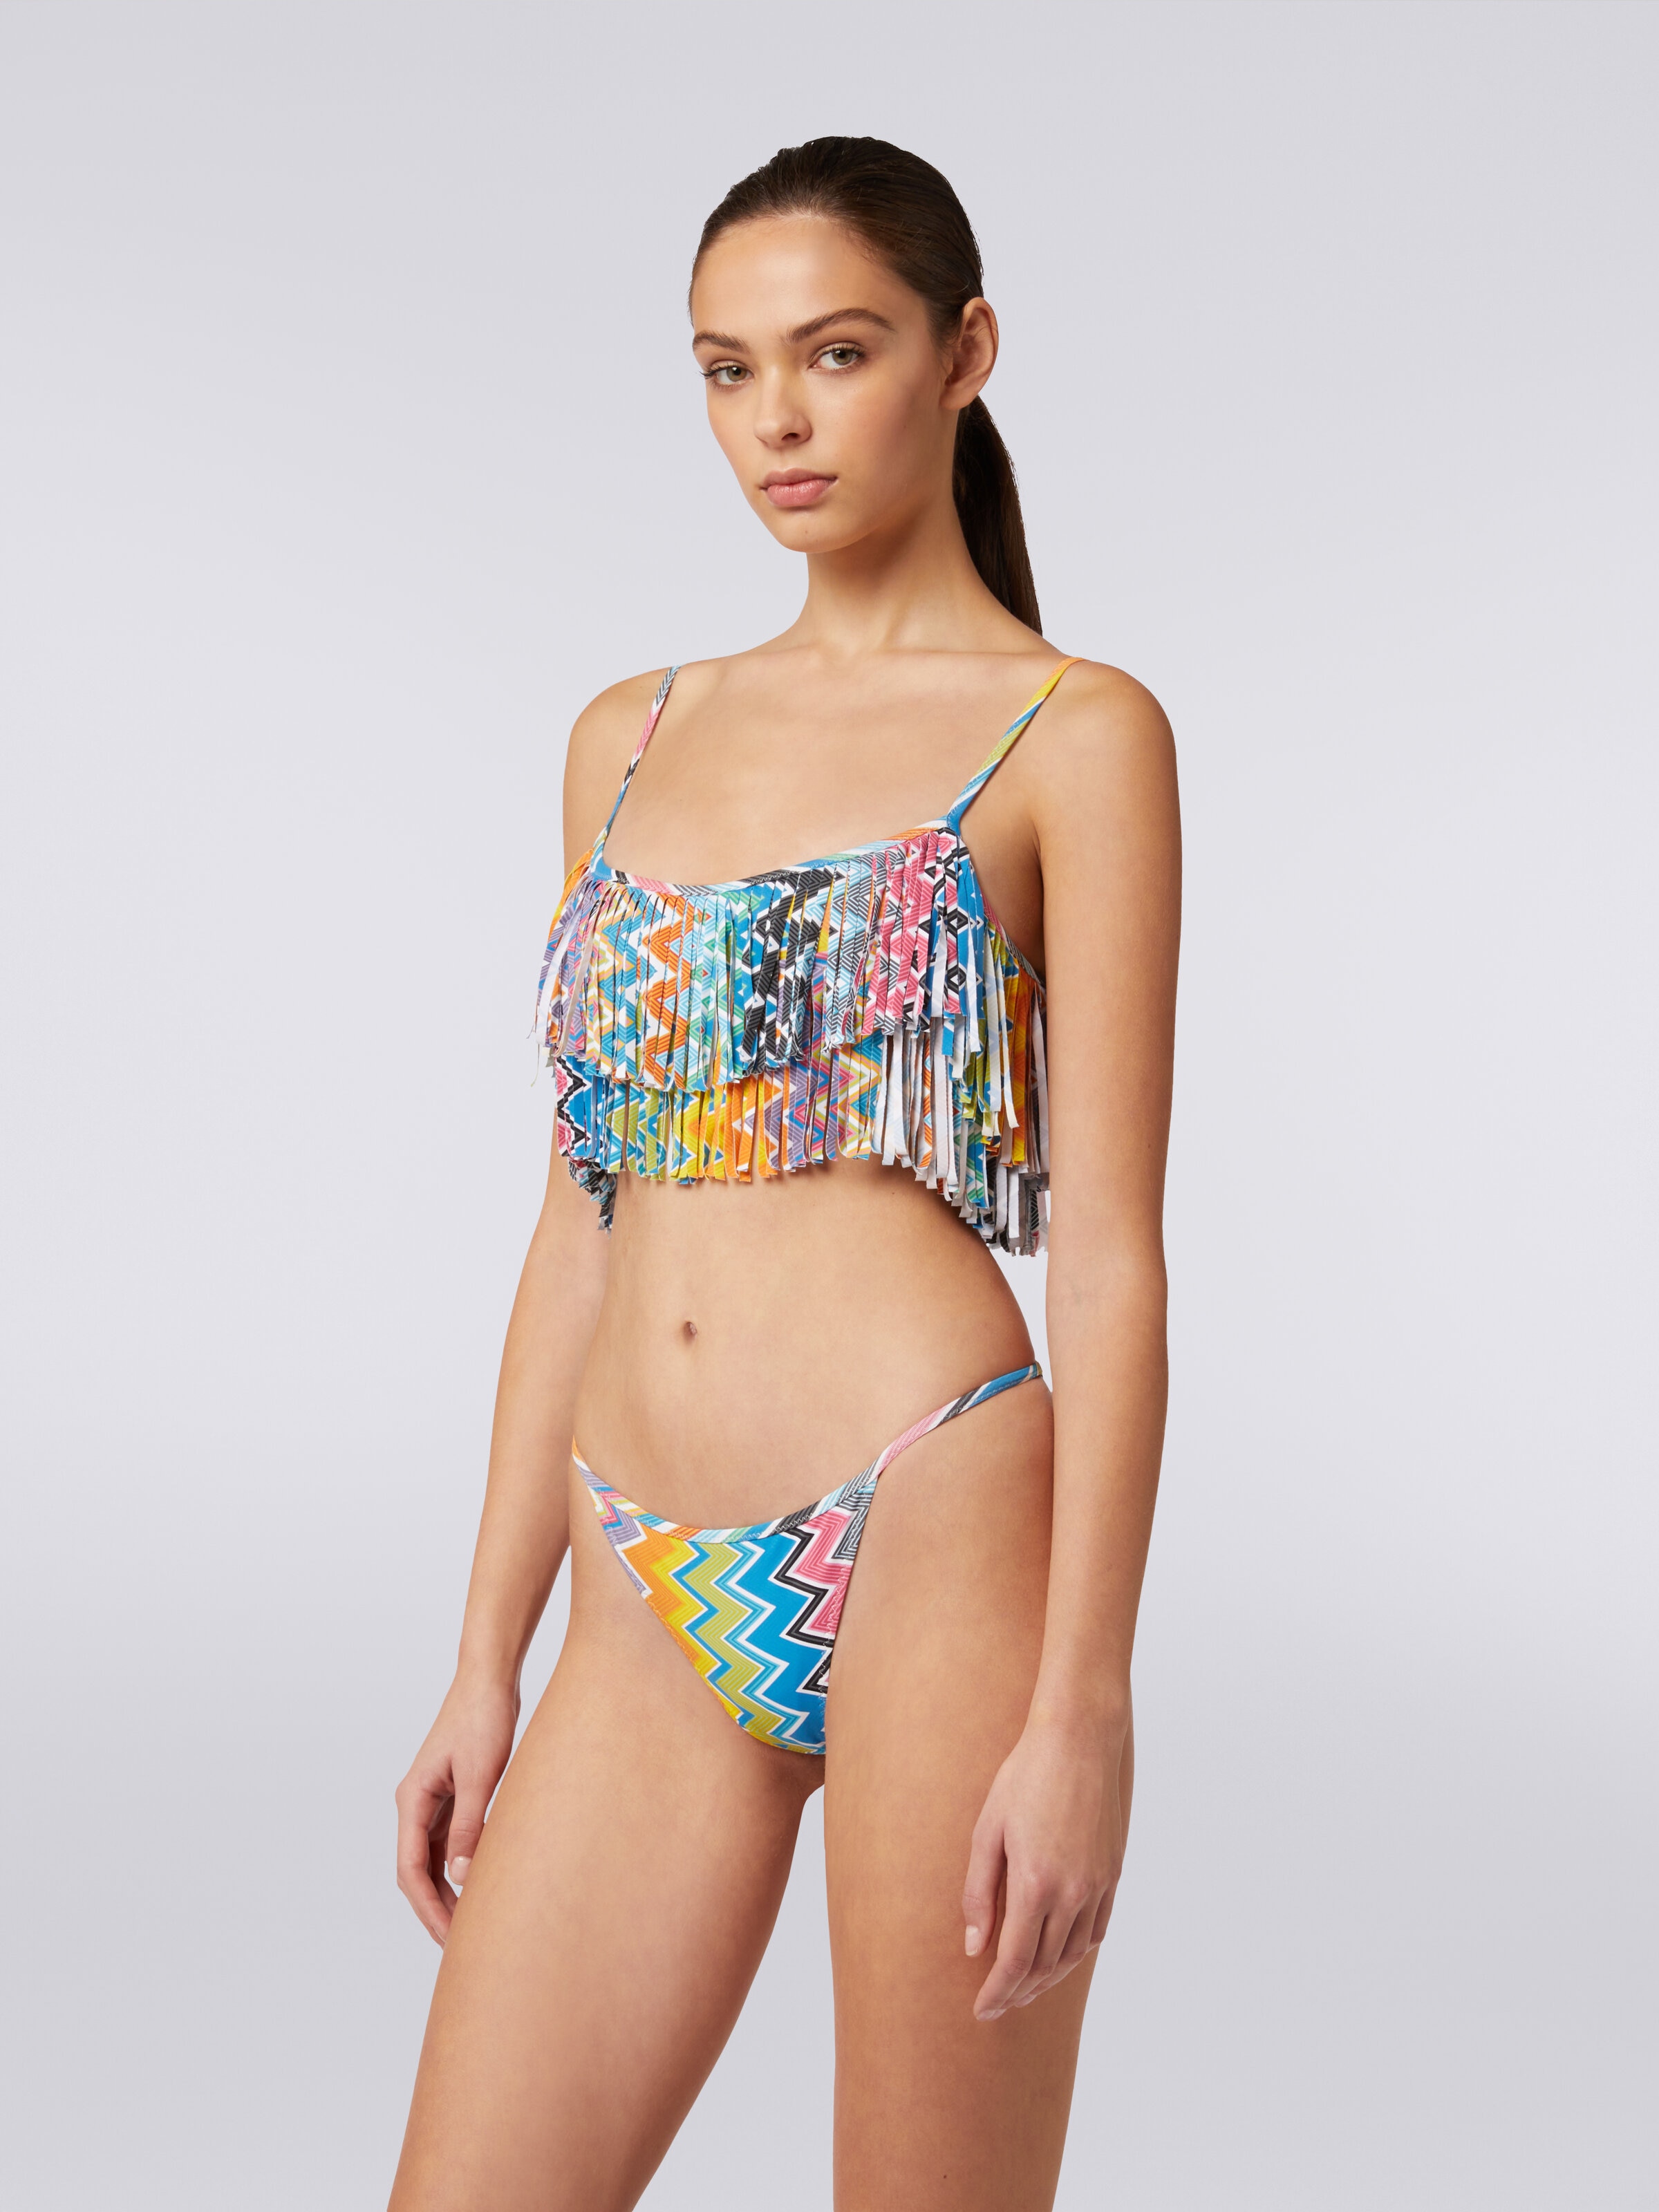 Printed stretch fabric bikini with fringed top, Multicoloured  - 2